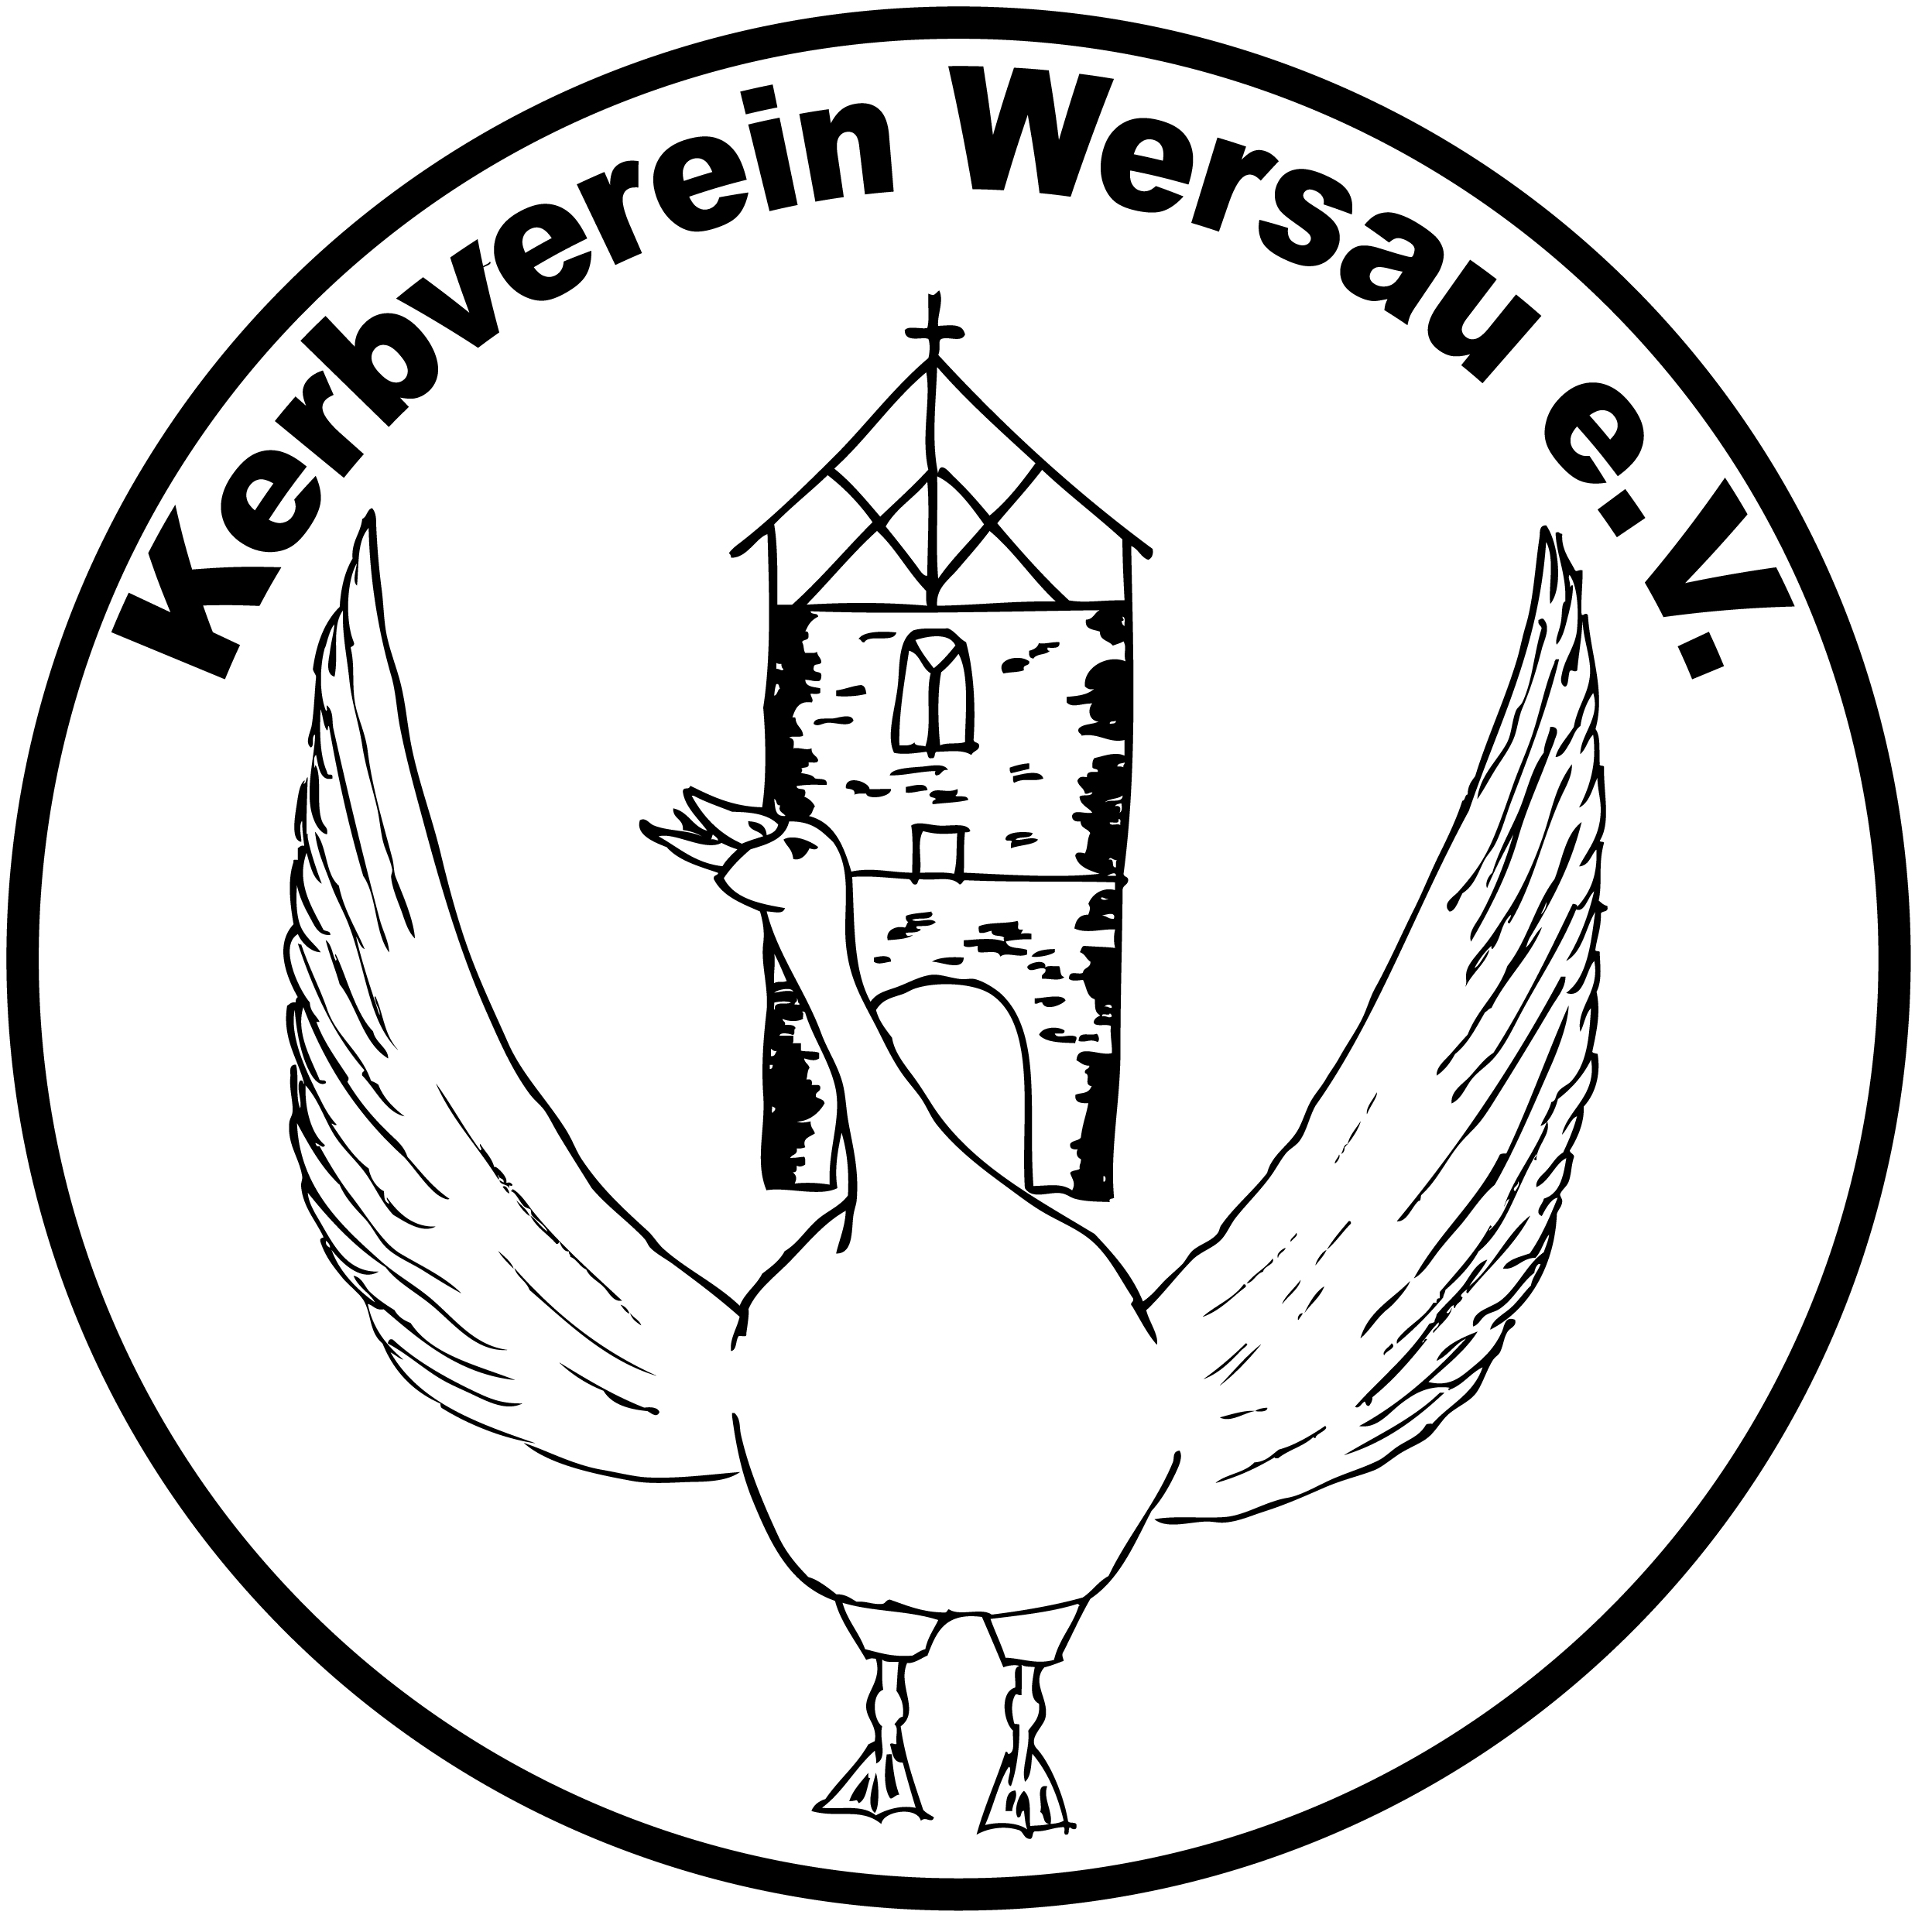 KerbWersau Motiv Vorne Links Logo Shirt2015